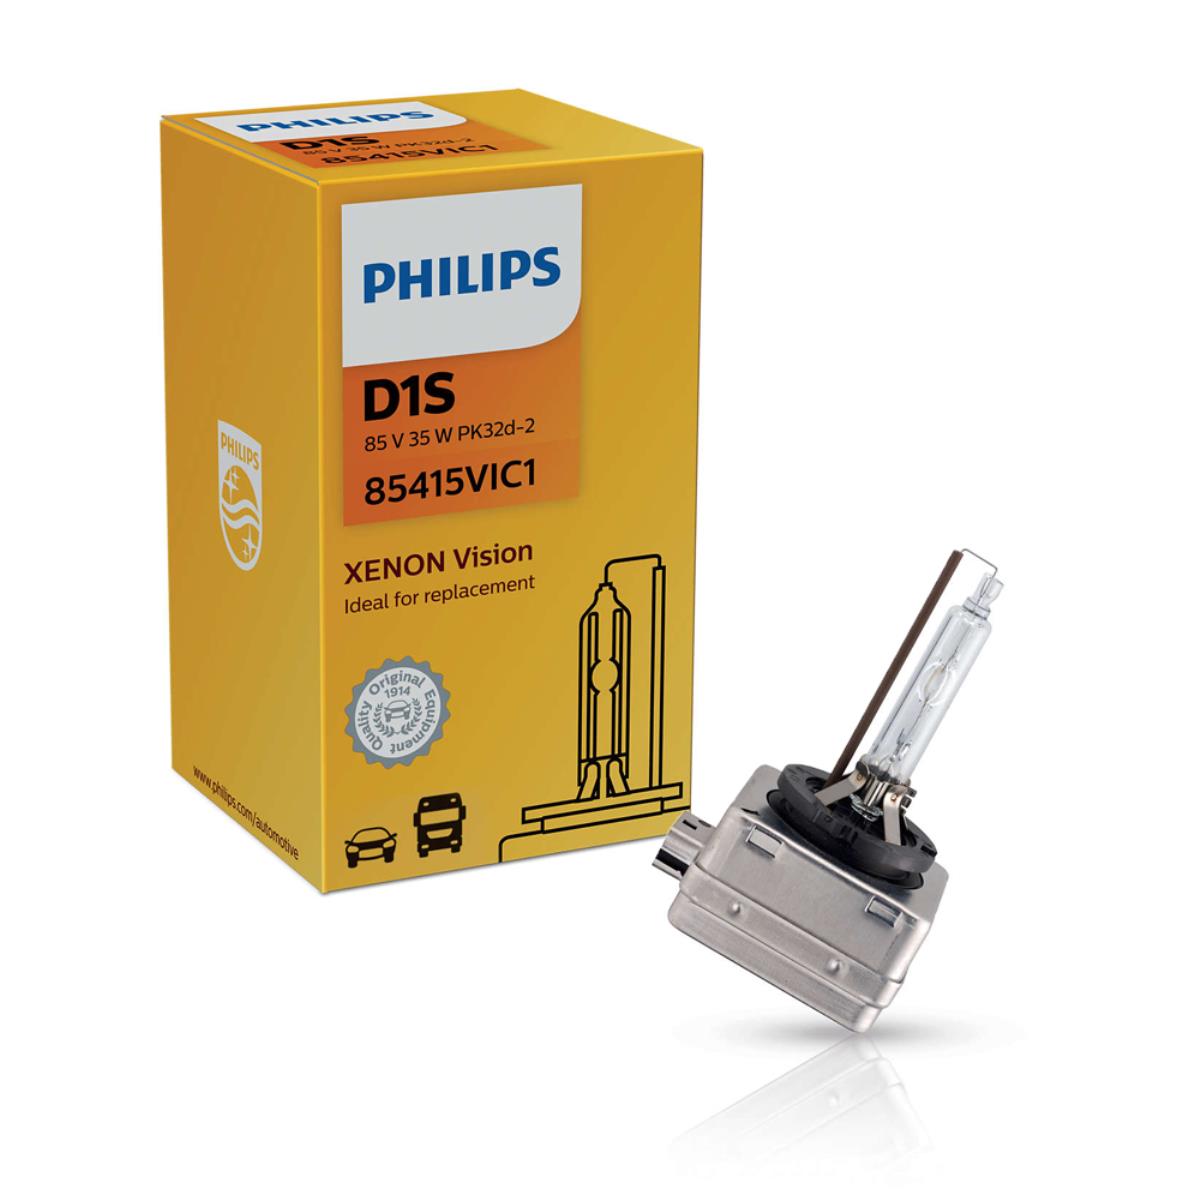 D1S 35W PK32d-2 Vision Xenon 1st. Philips